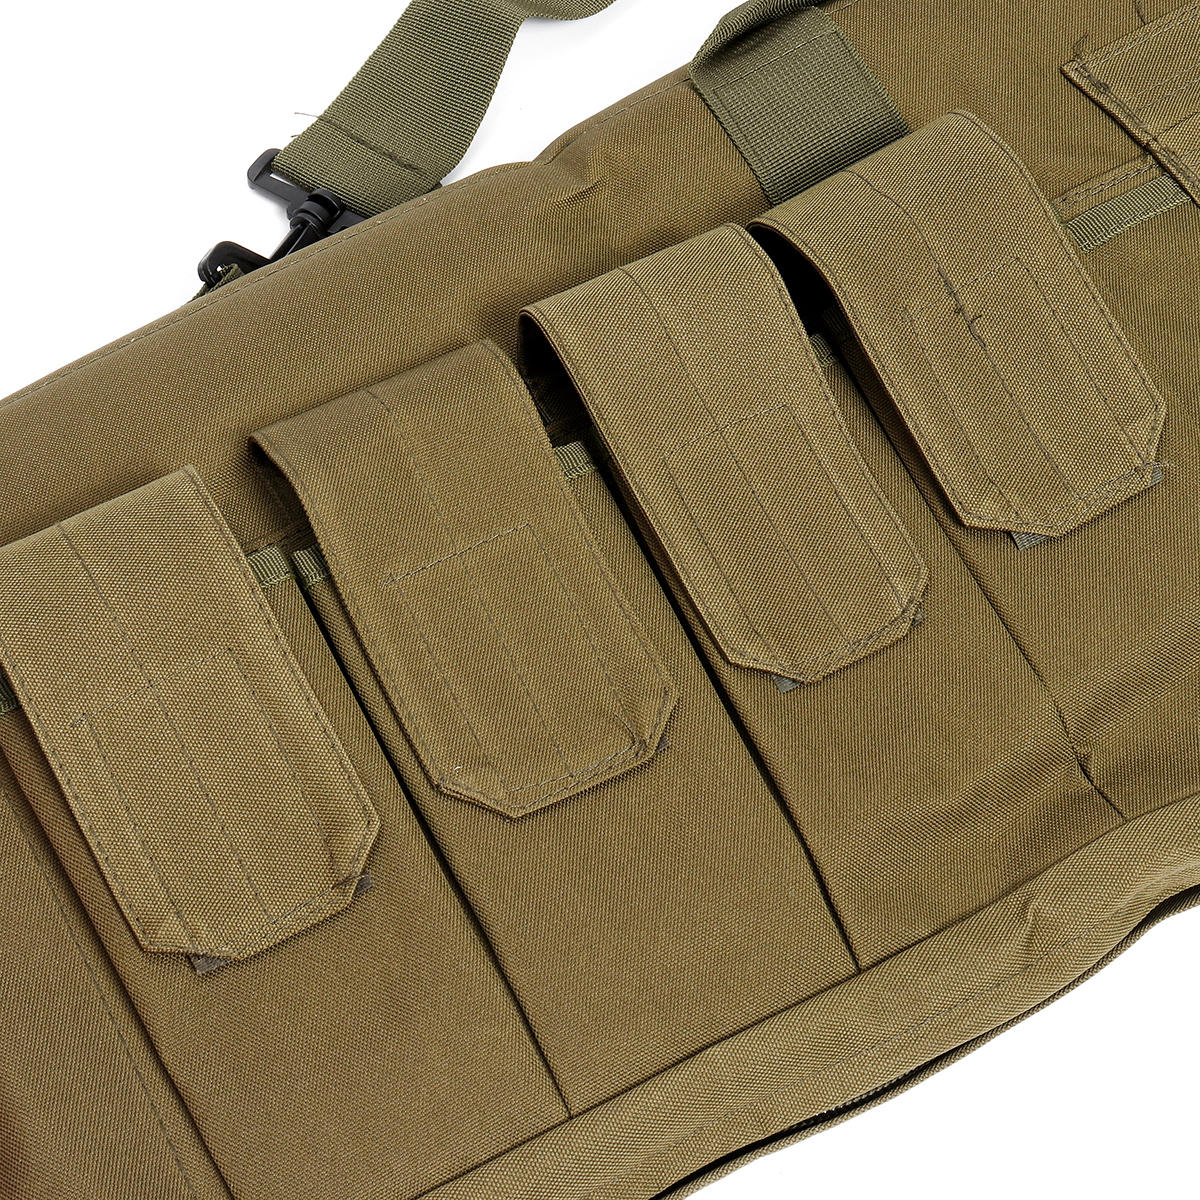 120x30x5cm outdoor tactical bag cs airsoft protection case tactical ...